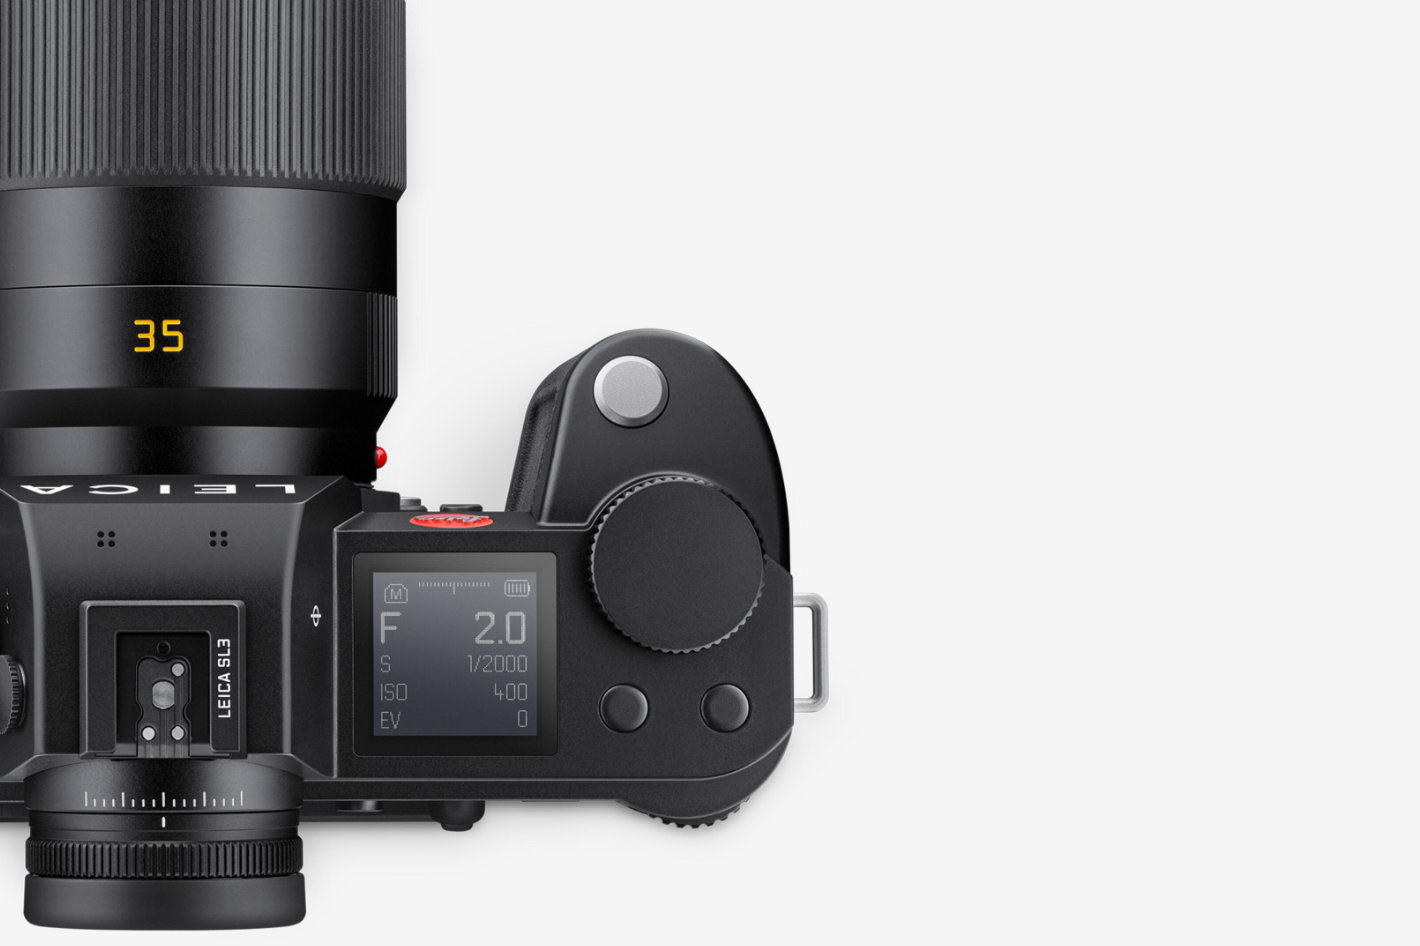 The new Leica SL3 has three AF technologies